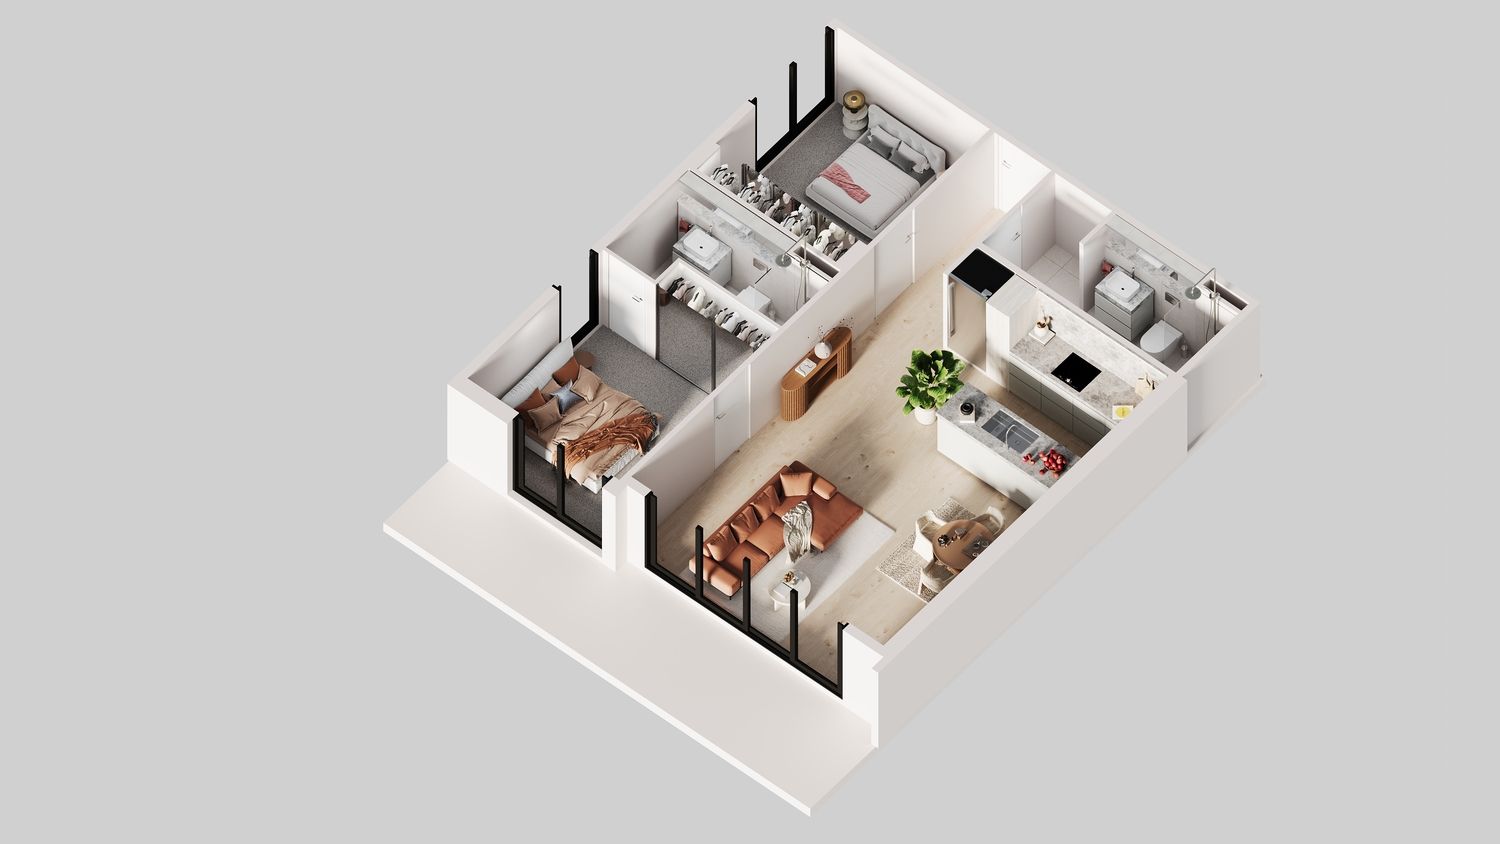 2 bedrooms Apartment / Unit / Flat in 206/1631-1637 Malvern Road GLEN IRIS VIC, 3146